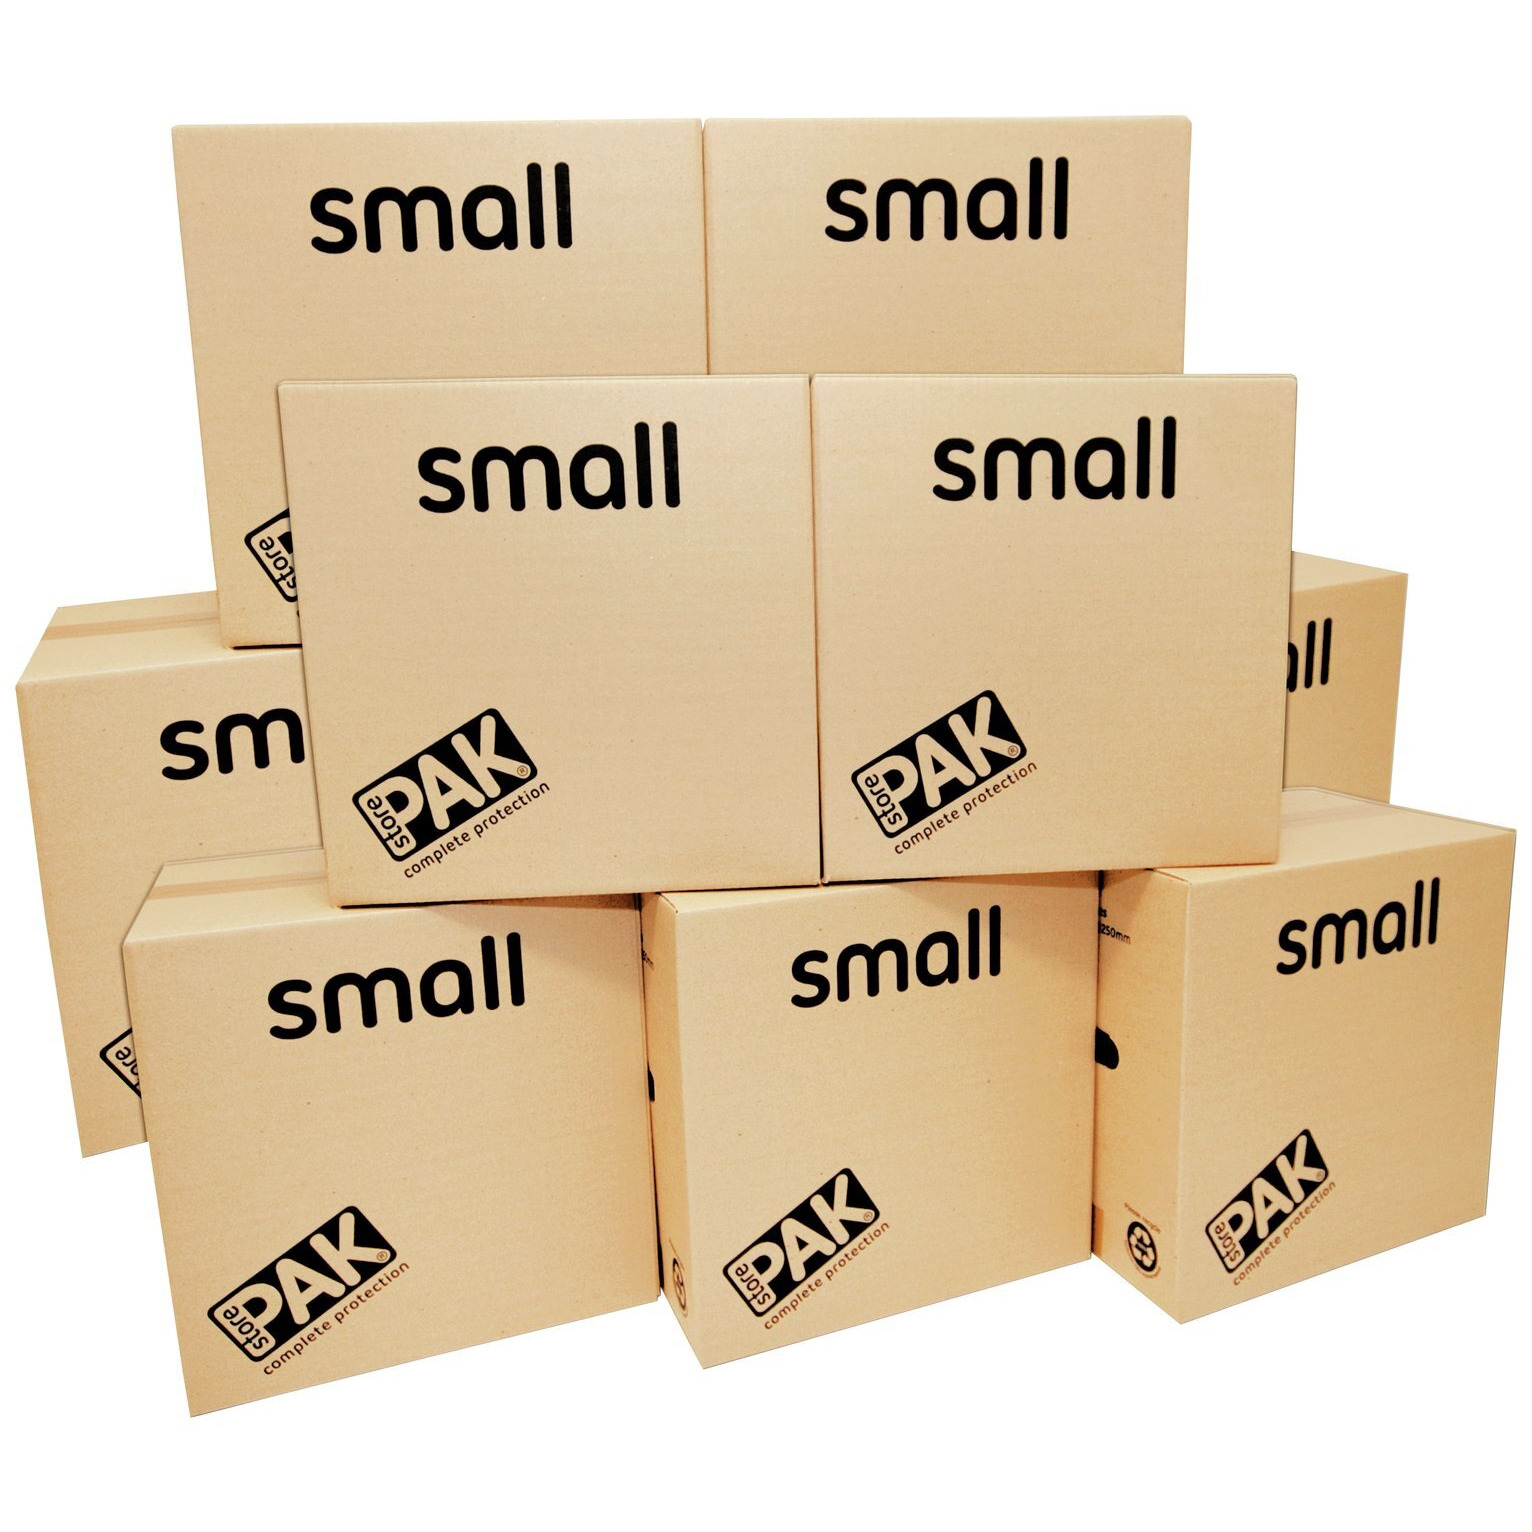 StorePAK Small Cardboard Boxes - Set of 10 - image 1